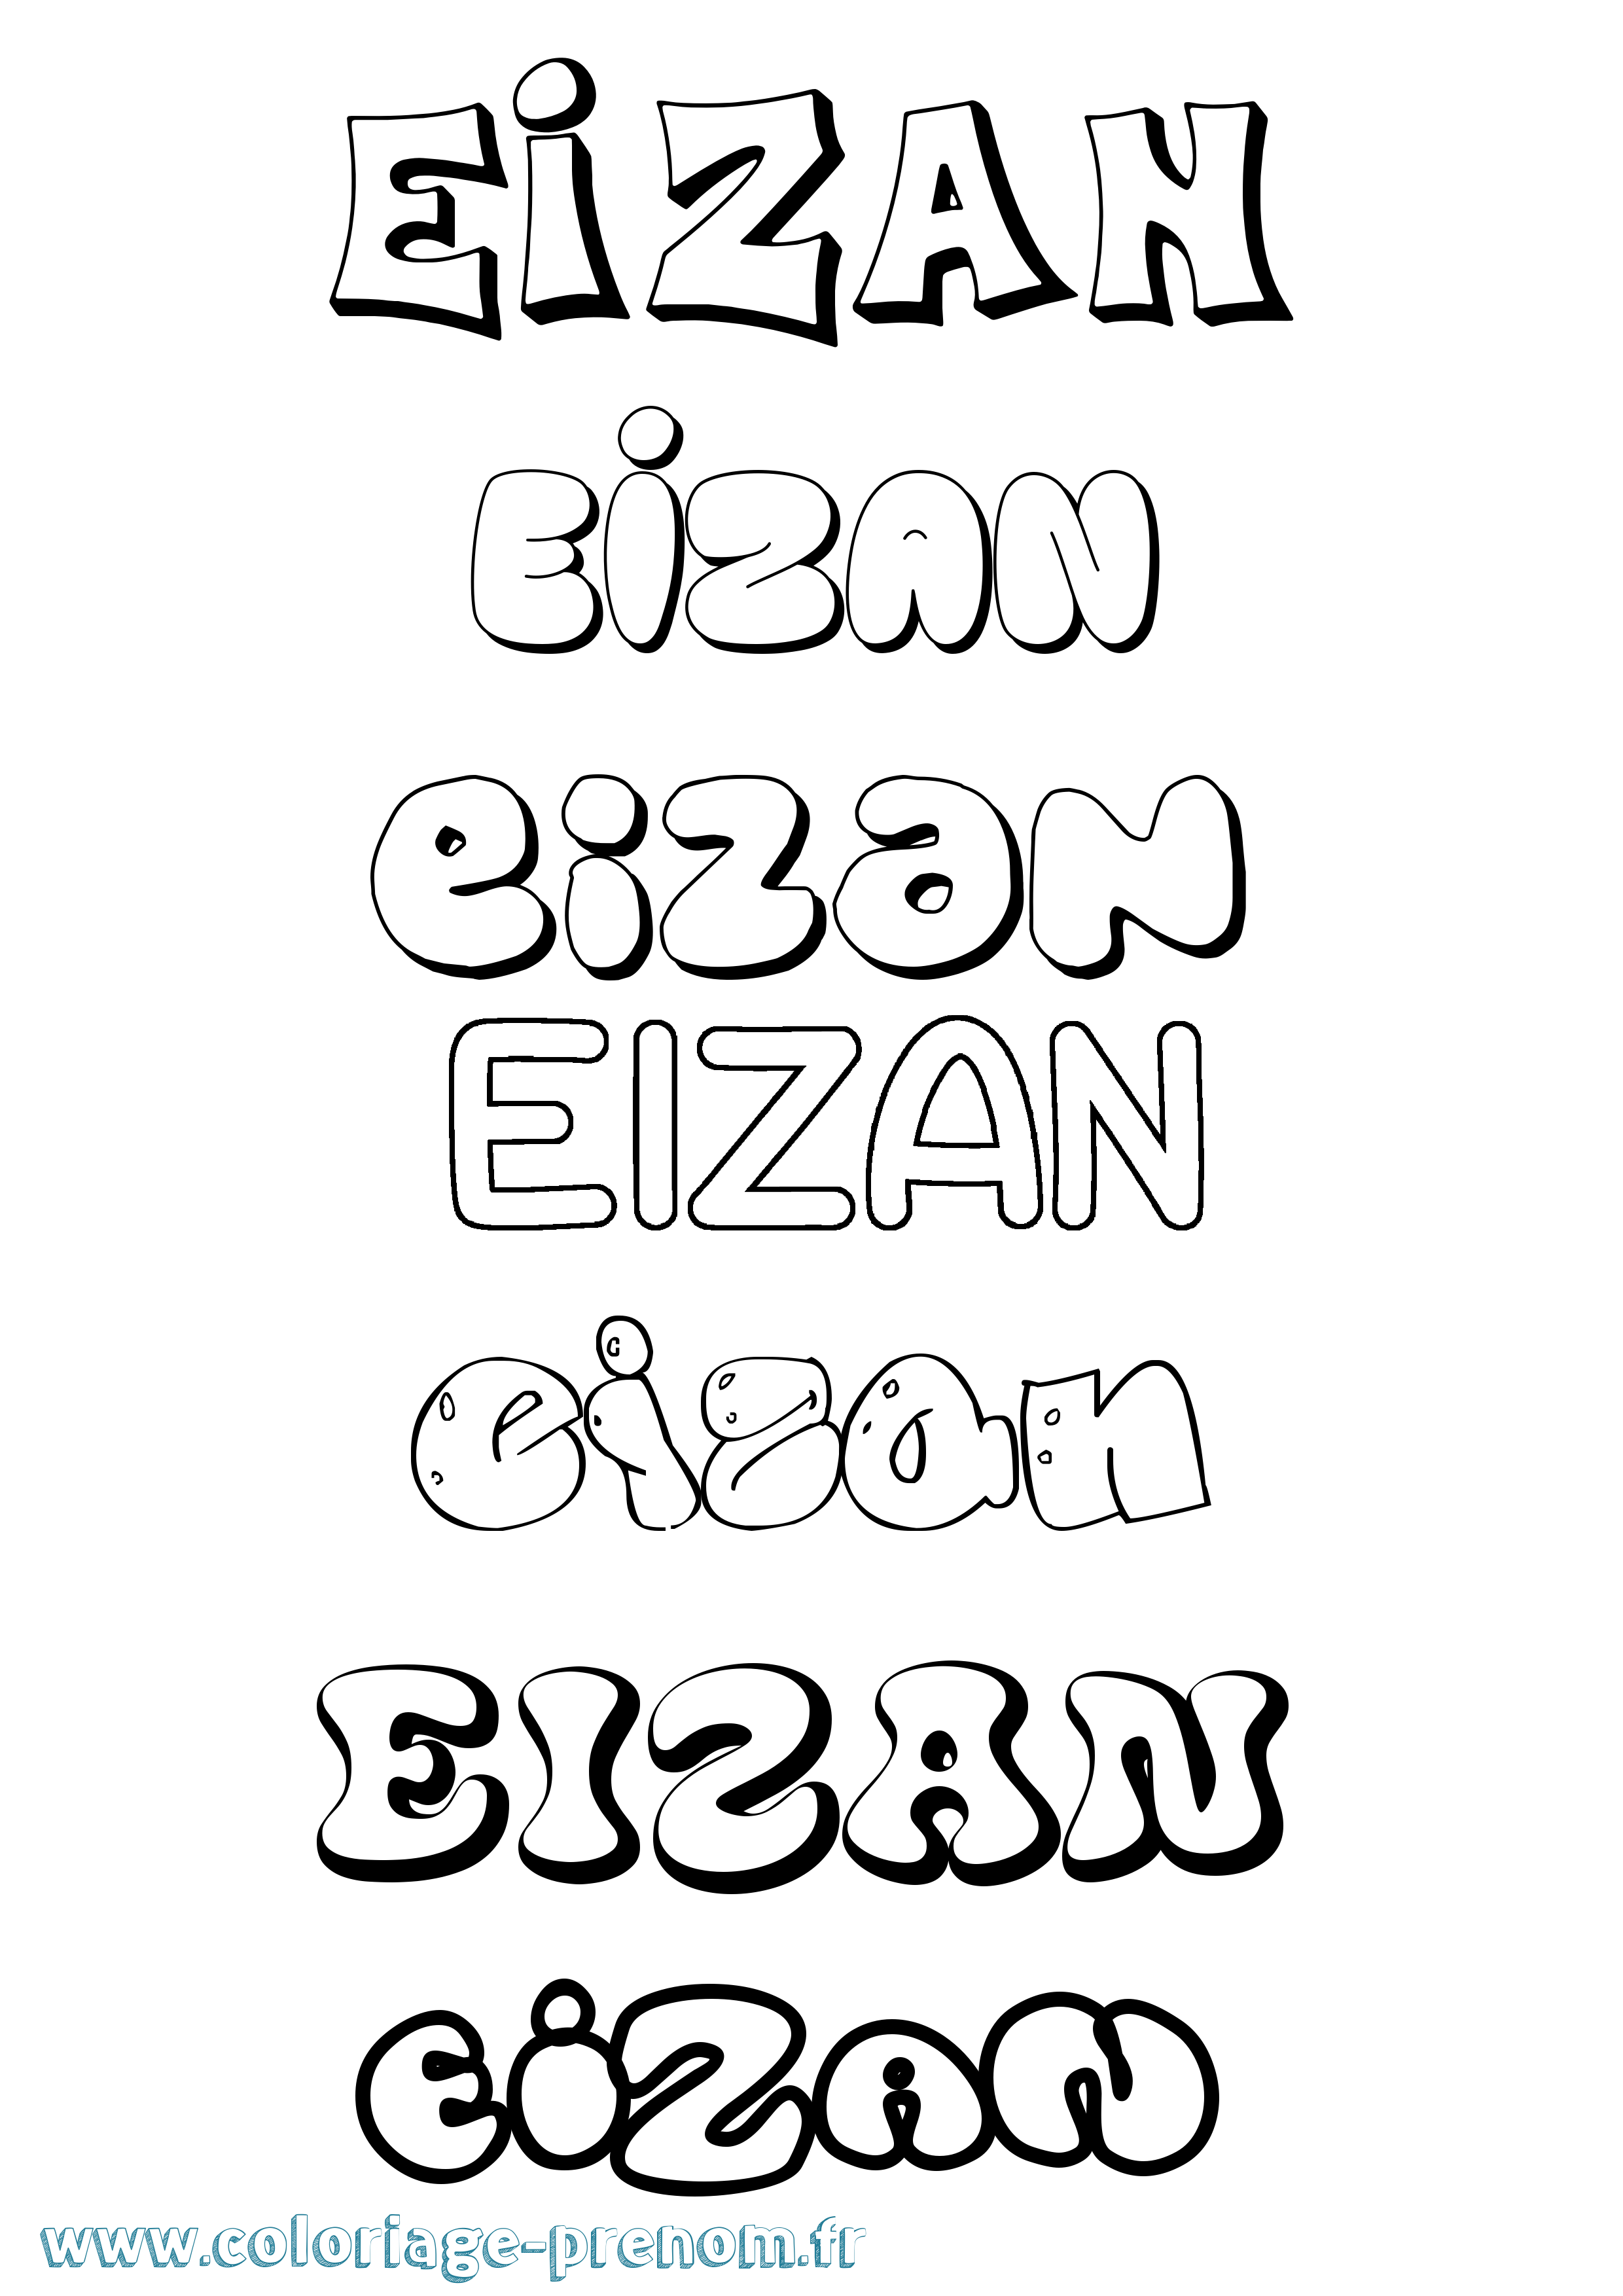 Coloriage prénom Eizan Bubble